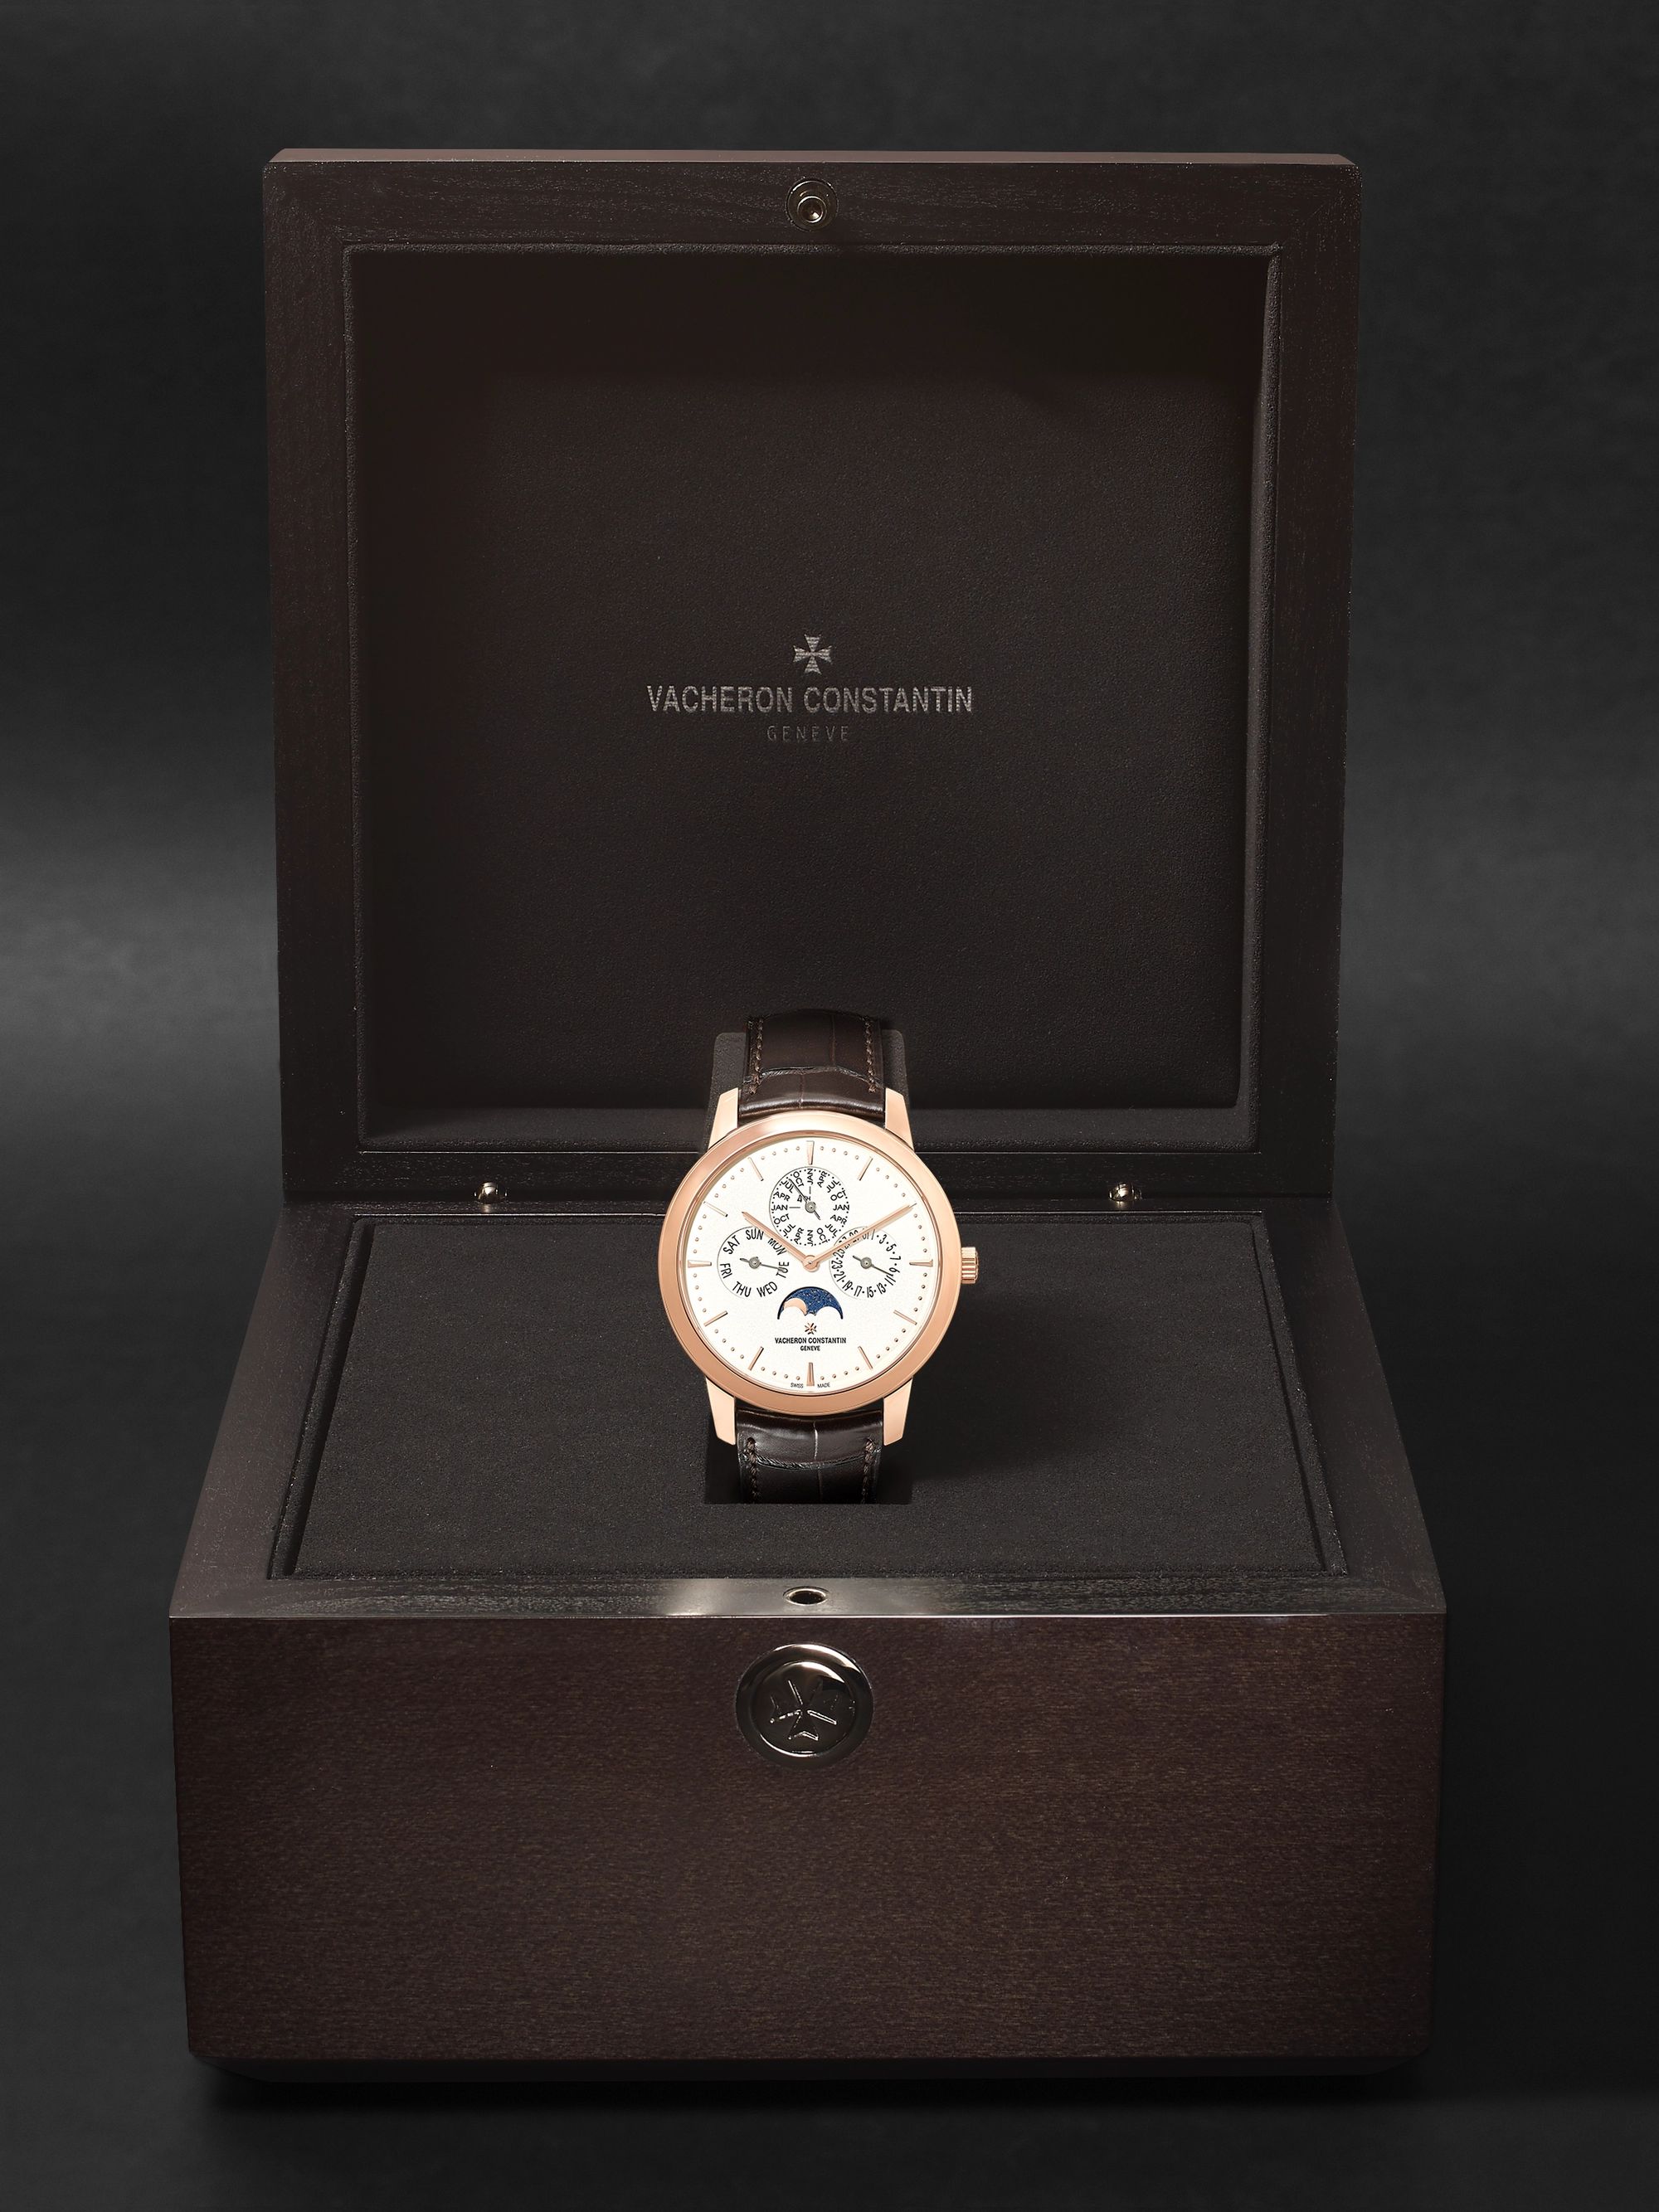 VACHERON CONSTANTIN Patrimony Perpetual Calendar Ultra-Thin Automatic 41mm 18-Karat Pink Gold and Alligator Watch, Ref. No. 43175/000R-9687